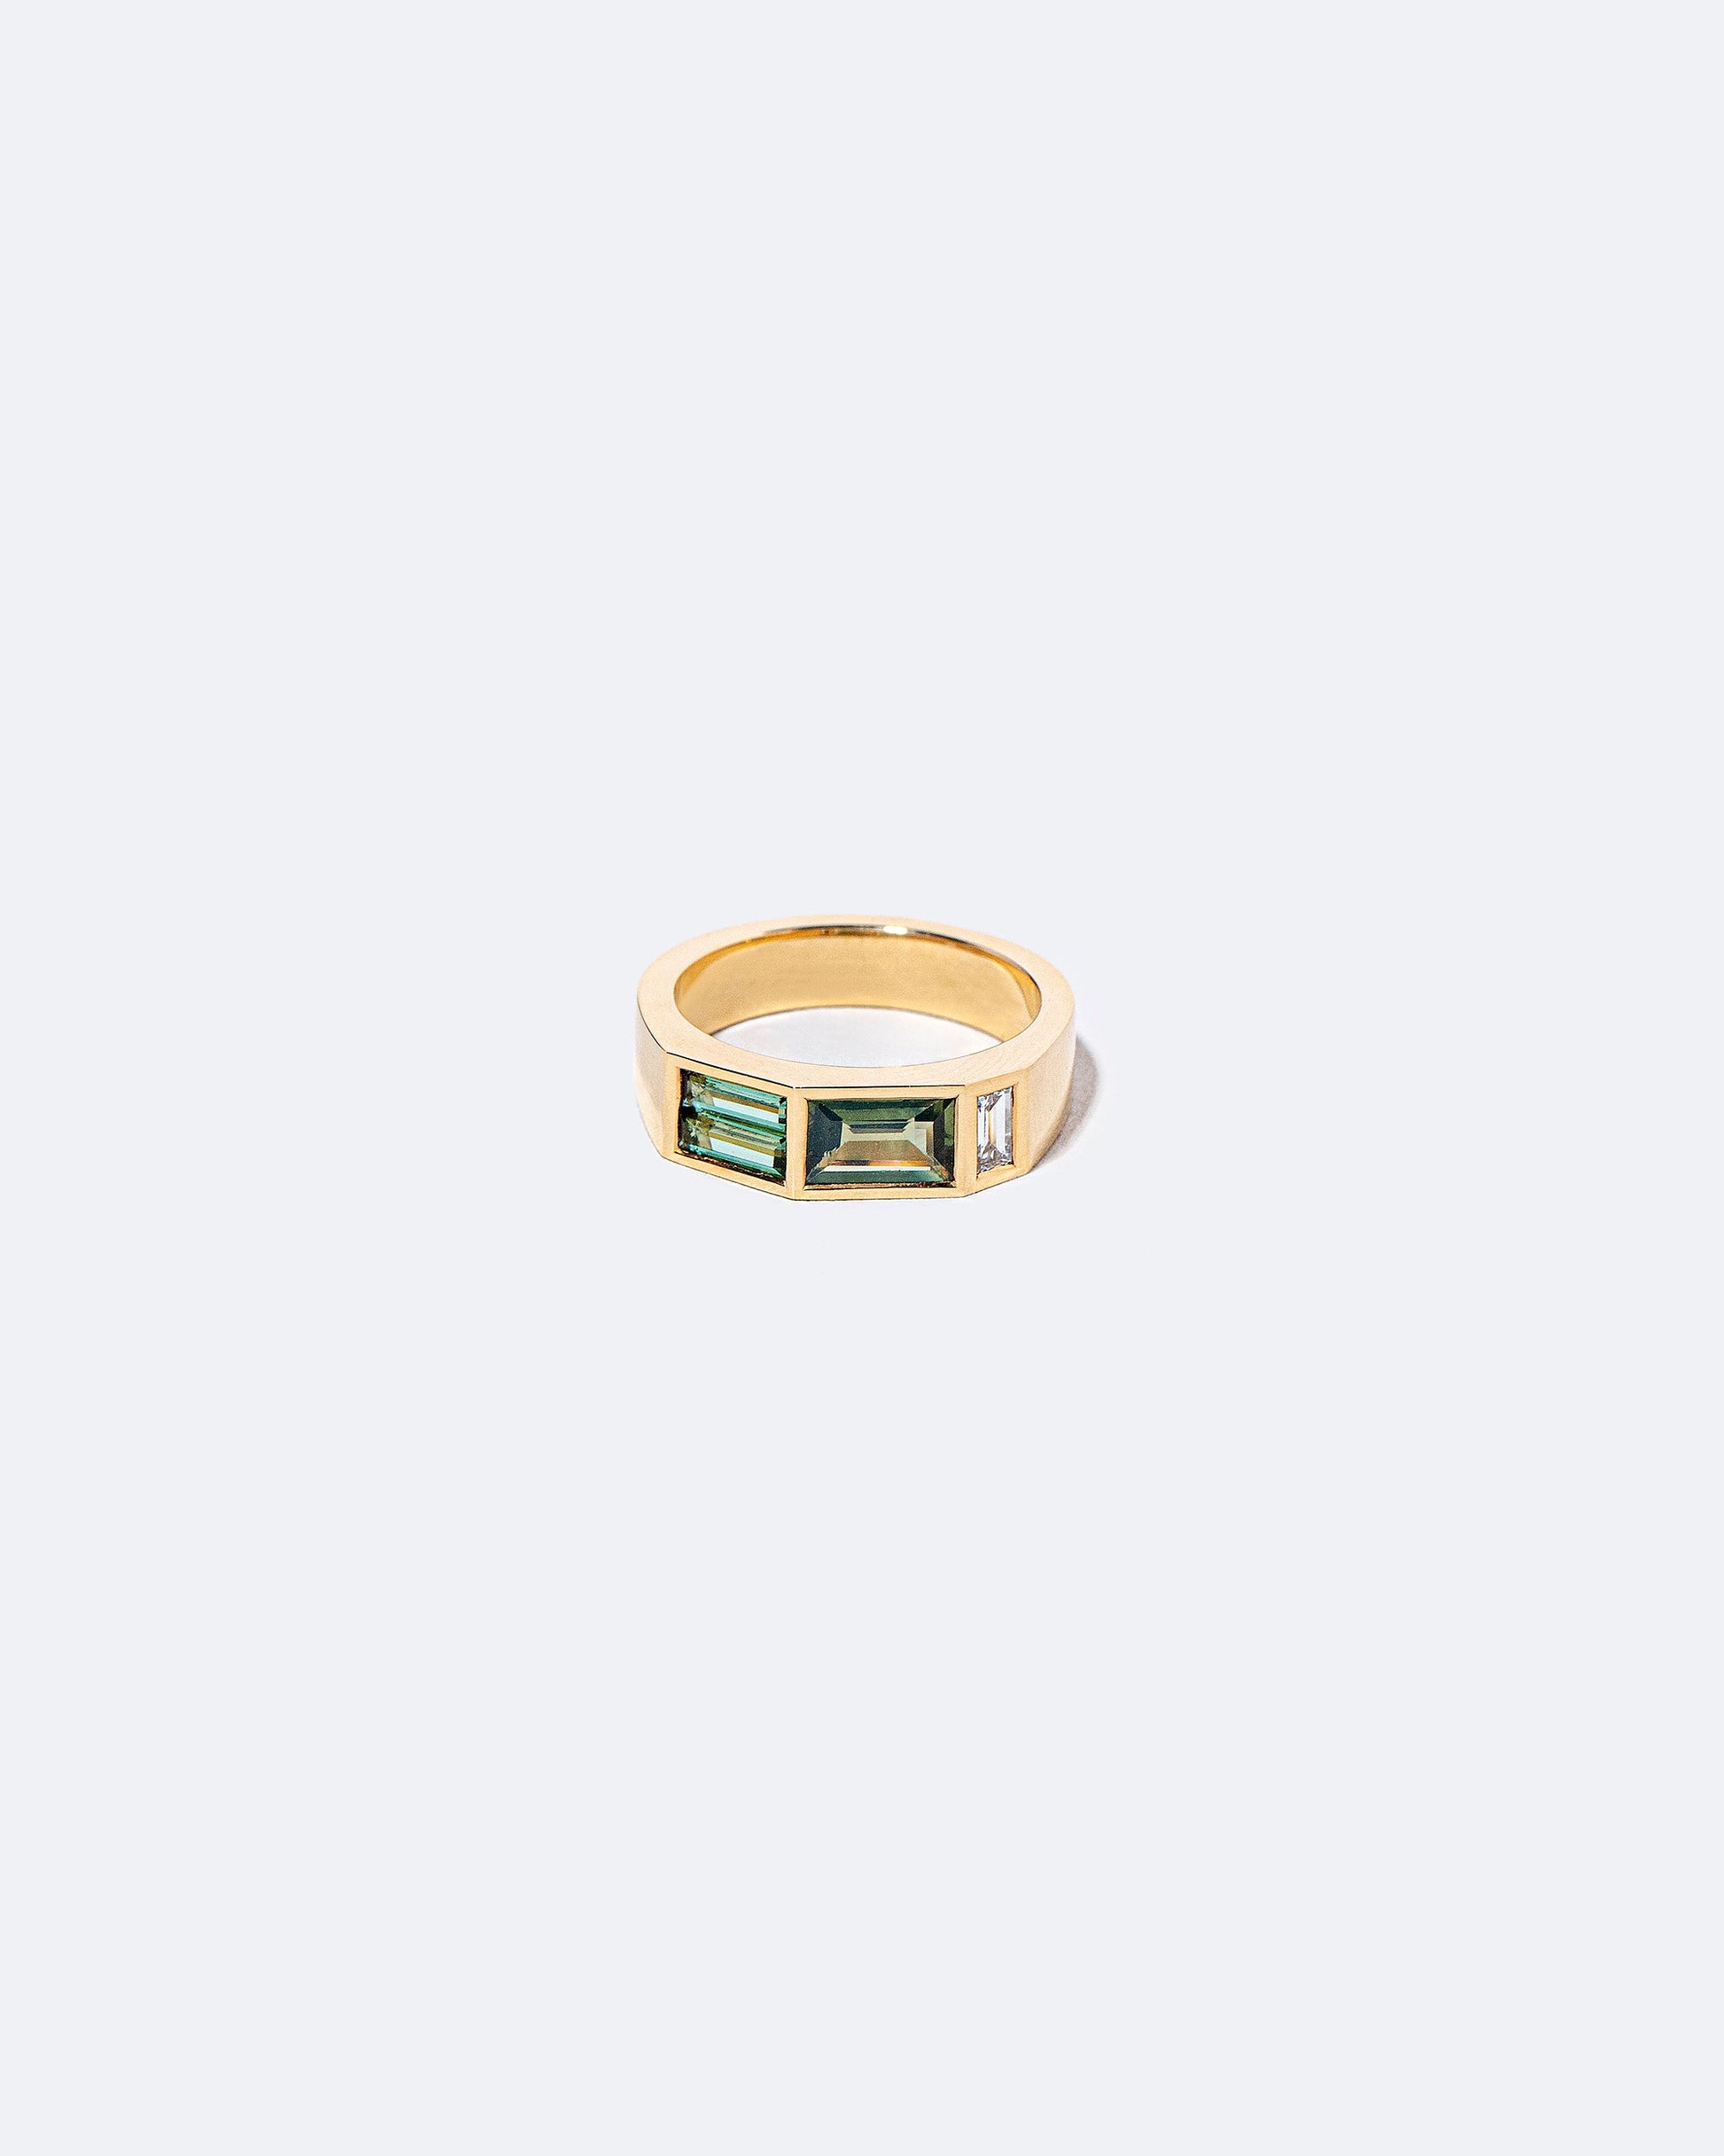  Hanlon's Ring on light color background.